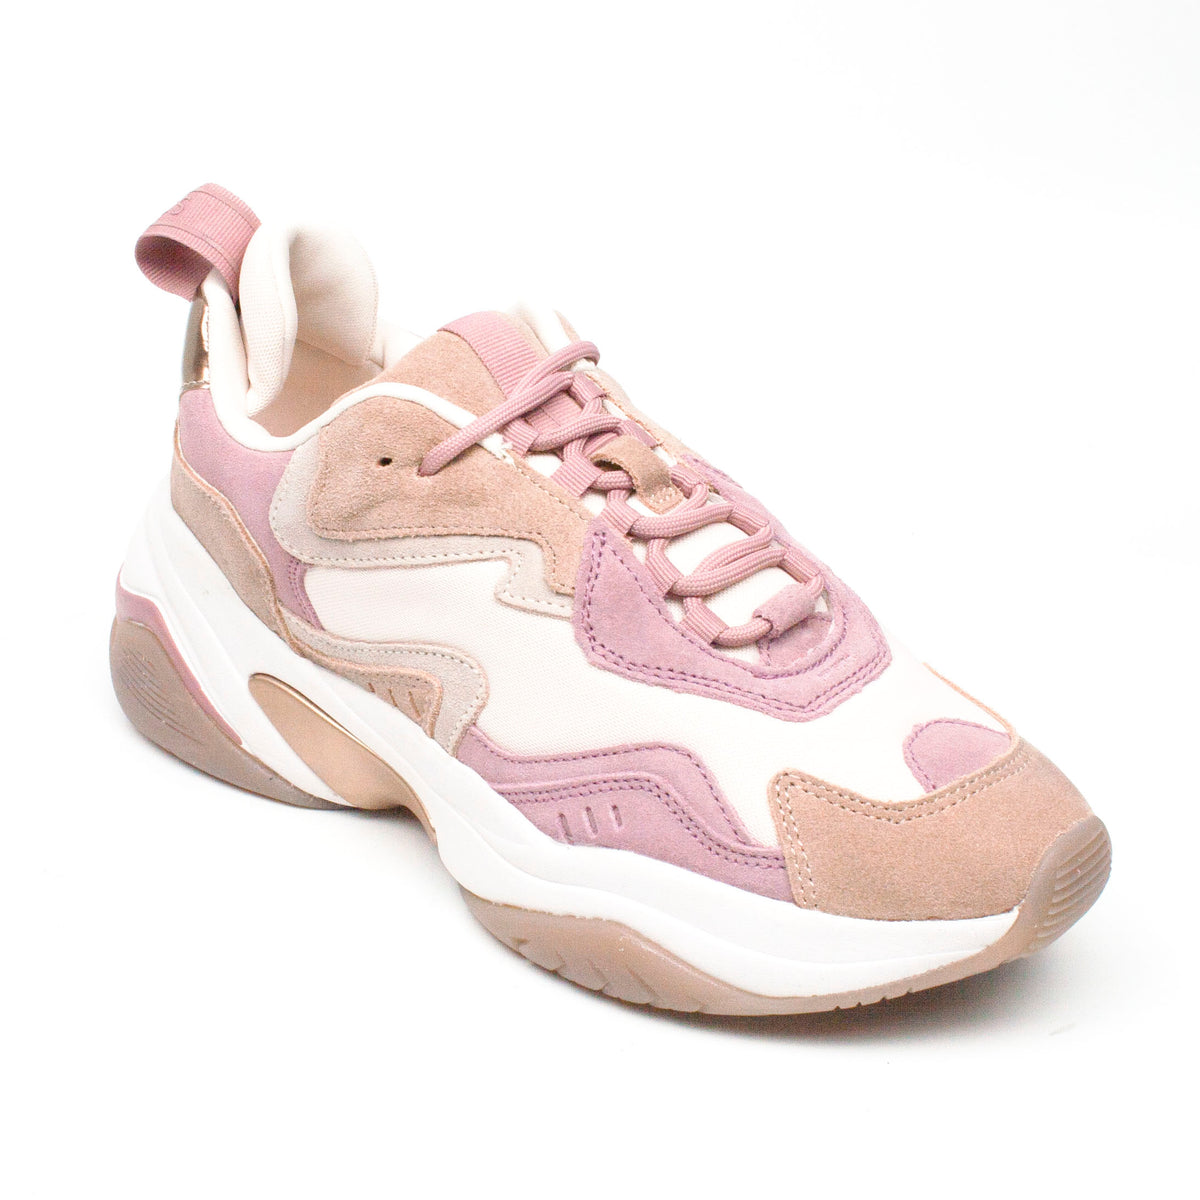 Tamaris pantofi dama Sneakers Rose roz ID1923-ROZ